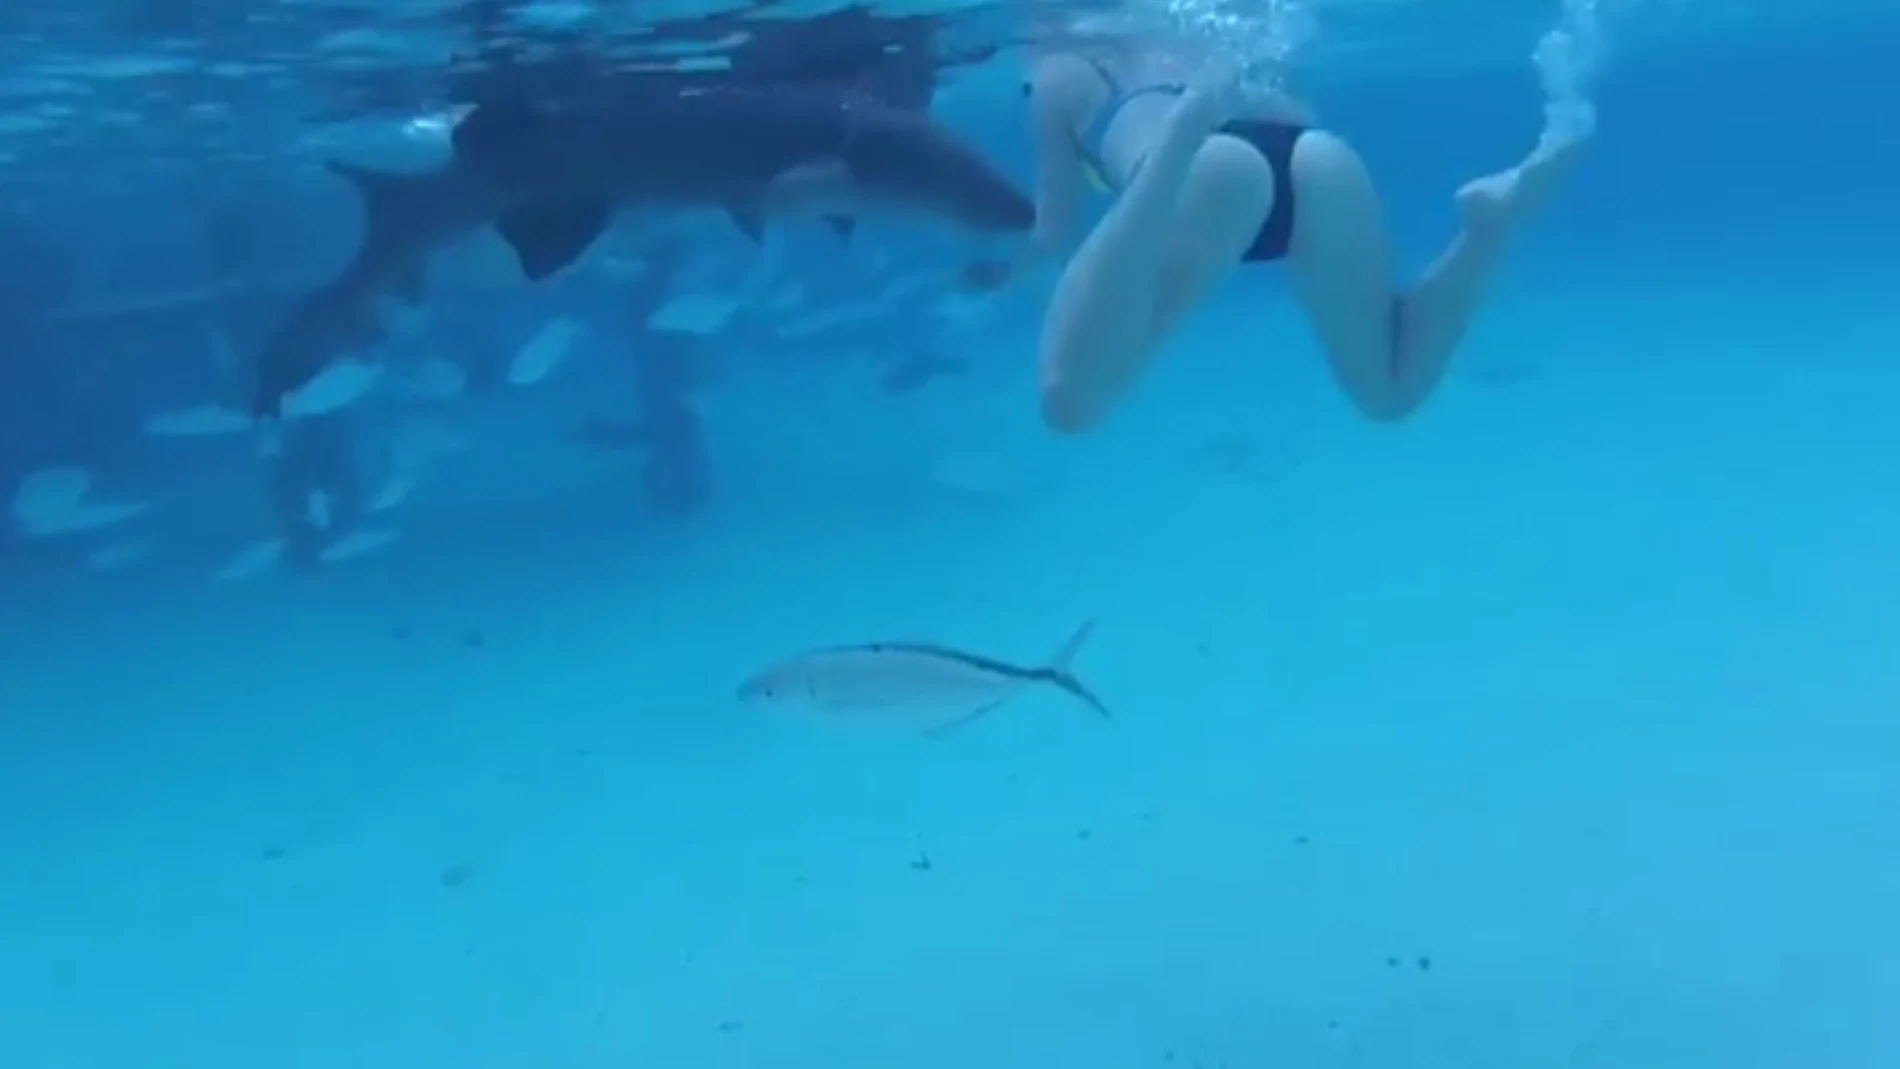 Ataque de un tiburón a una joven